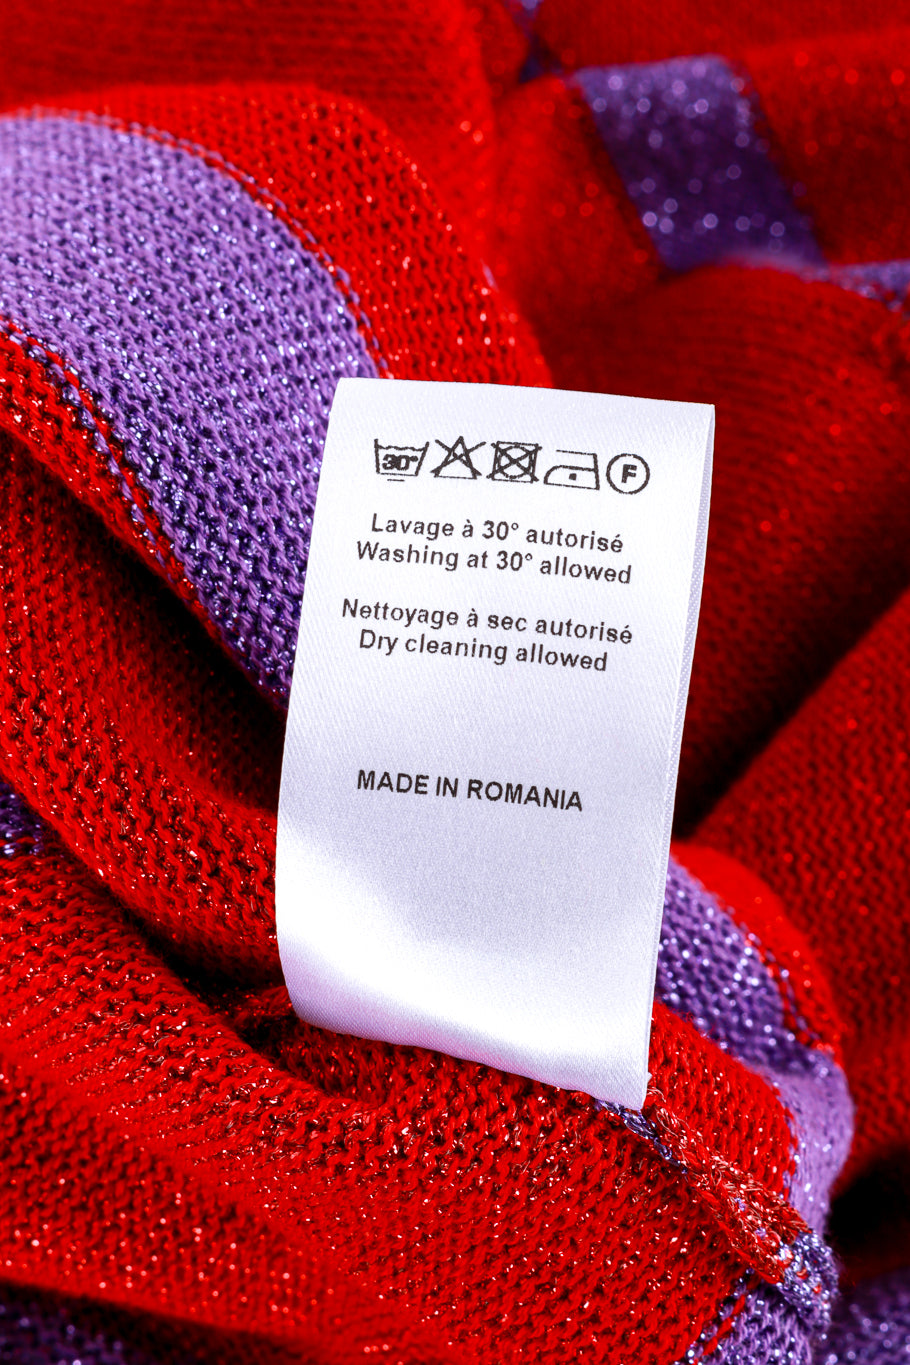 Paco Rabanne Striped Metallic Knit Maxi Dress label at Recess LA